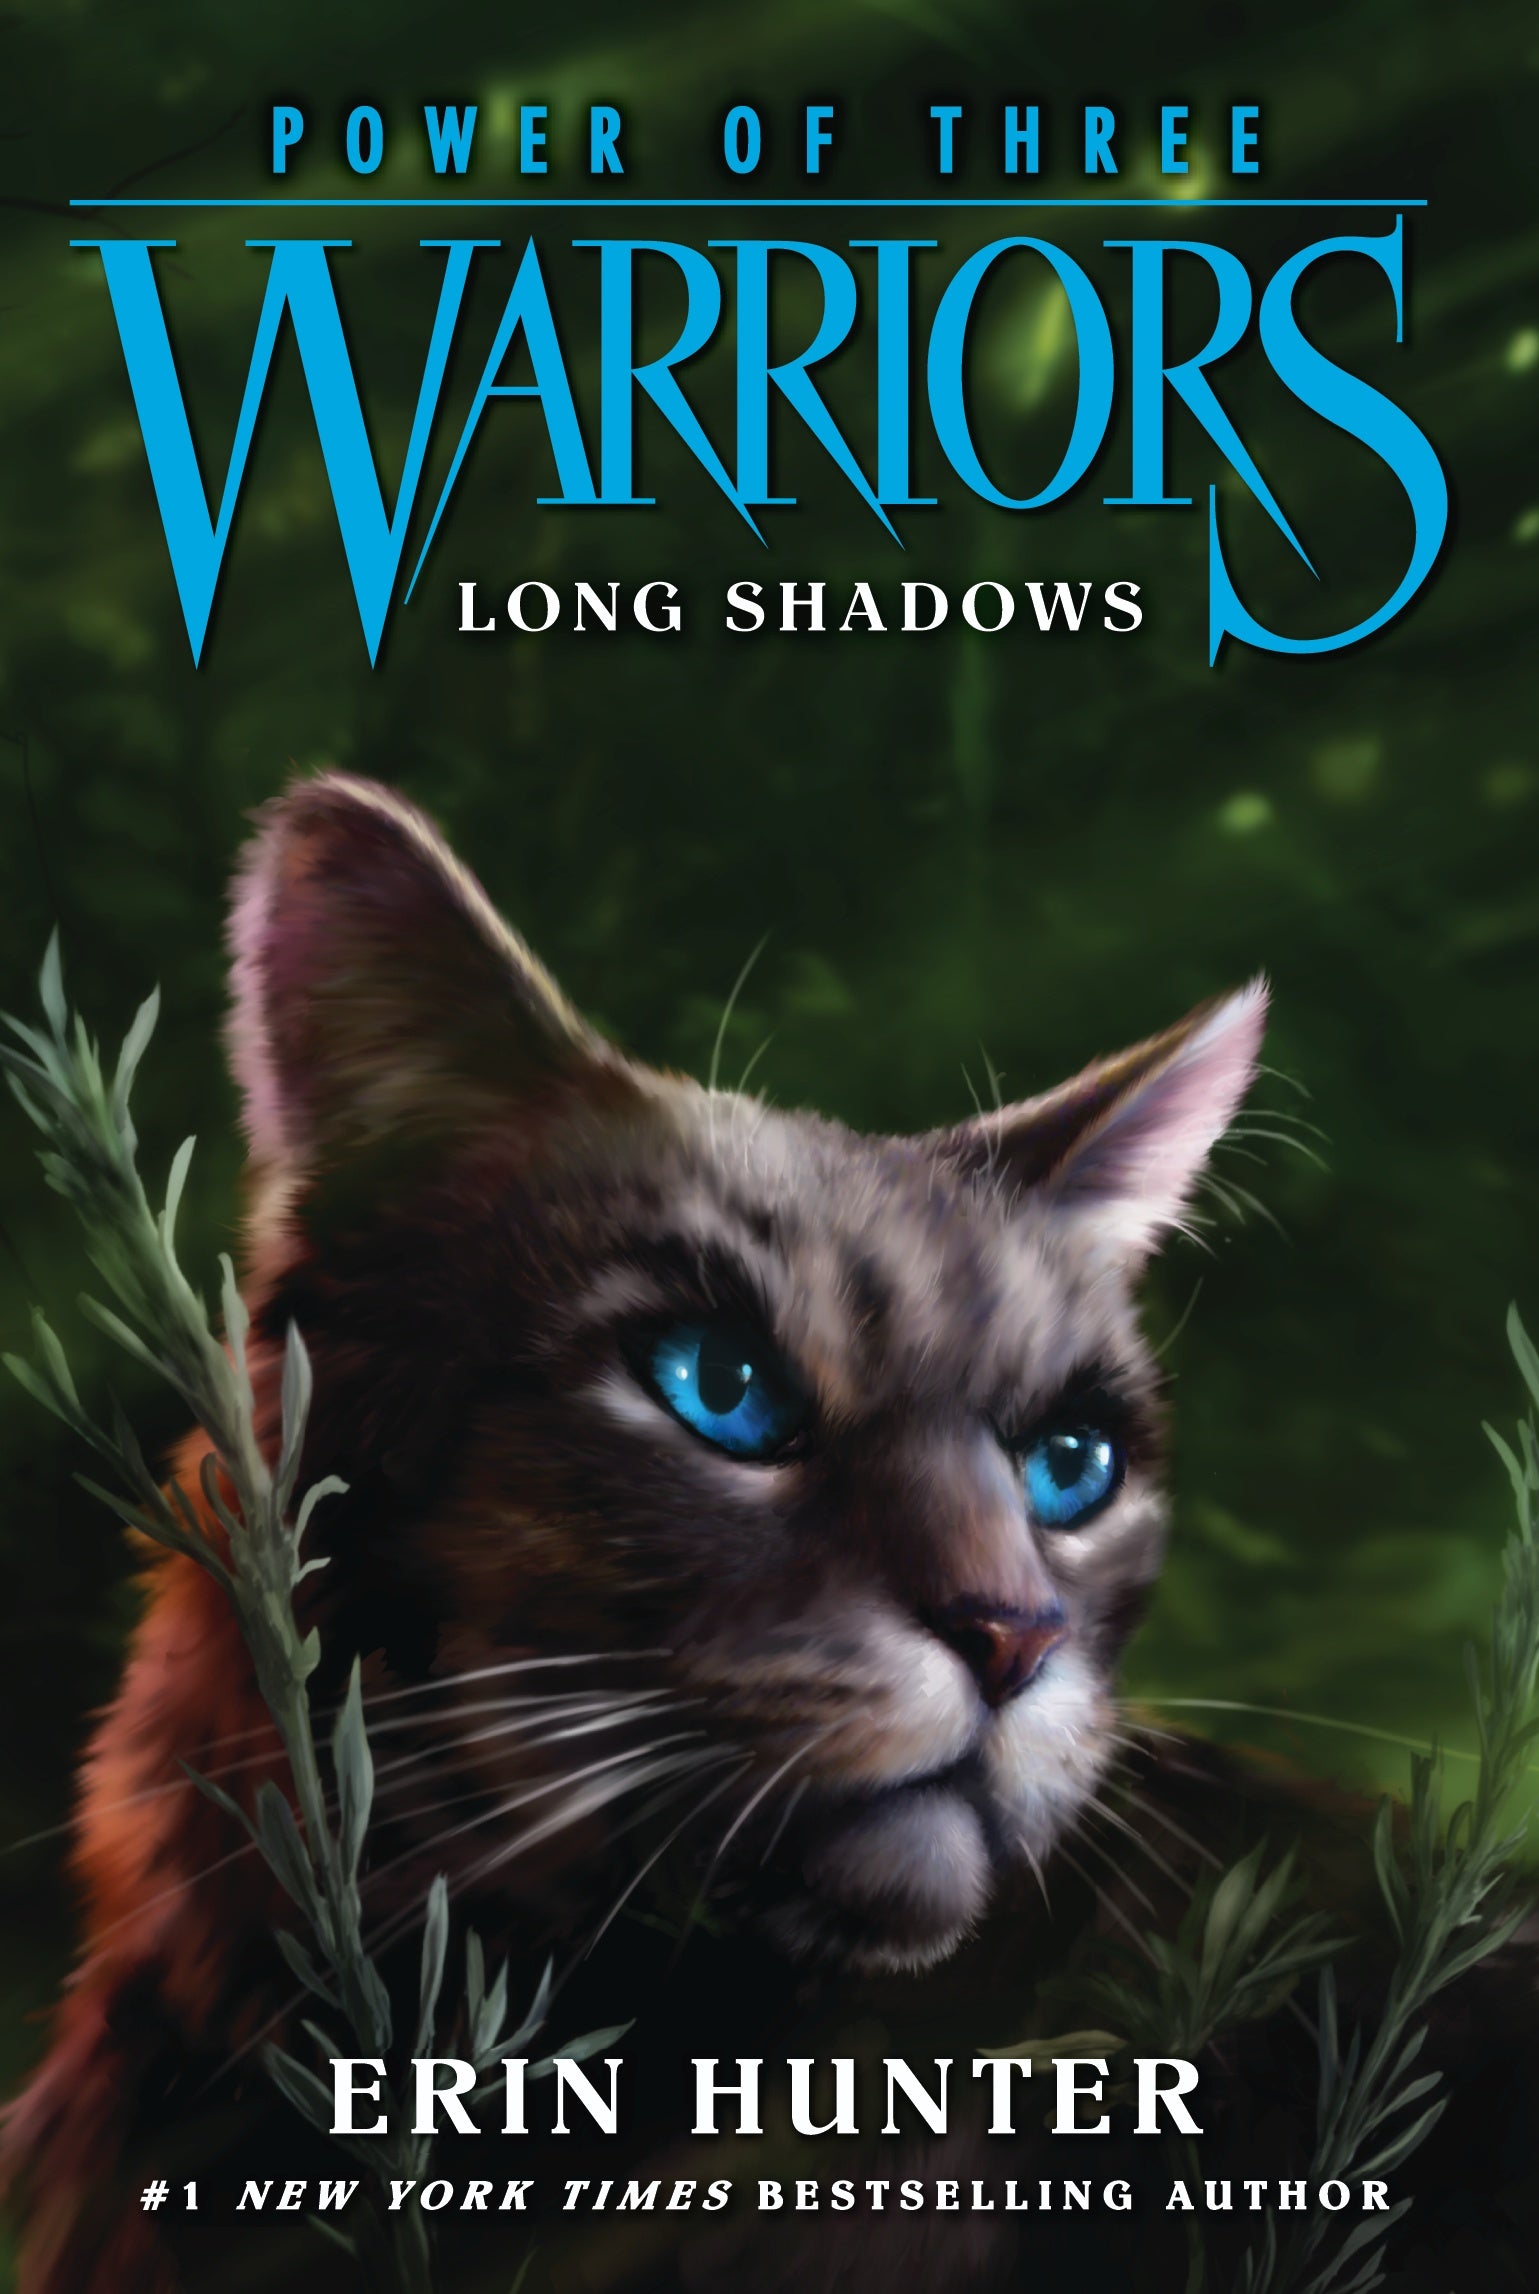 Power of three. Warriors Erin Hunter. Warrior Cats книга. Erin Hunter Cats Warriors. Длинные тени коты Воители обложка.